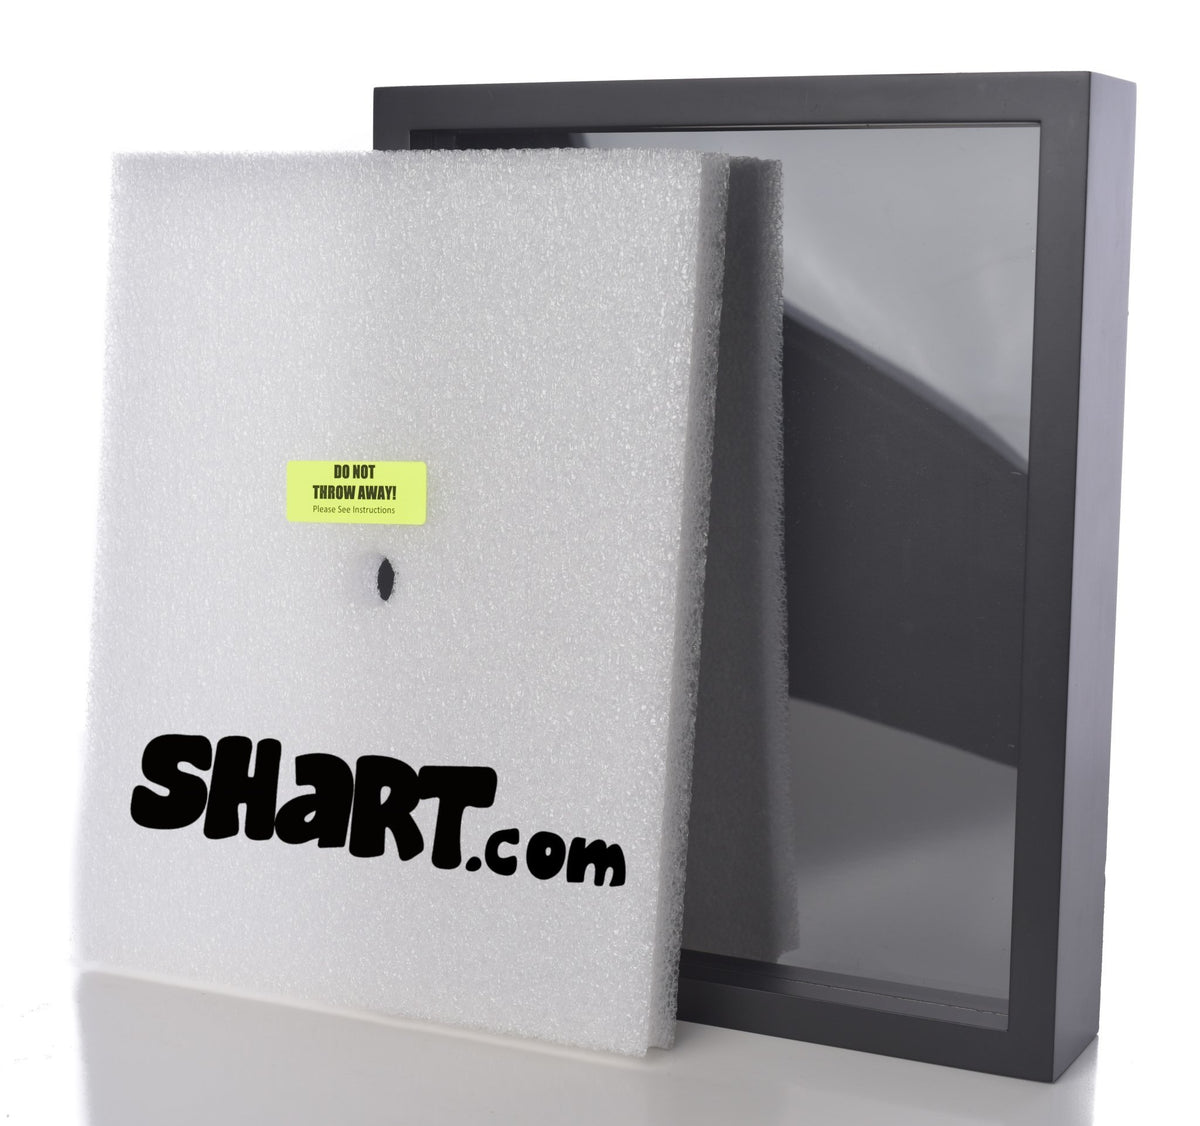 Shart Original T-Shirt Frame Display Case (Black) 11x14 - FREE SHIPPING - Shart.com